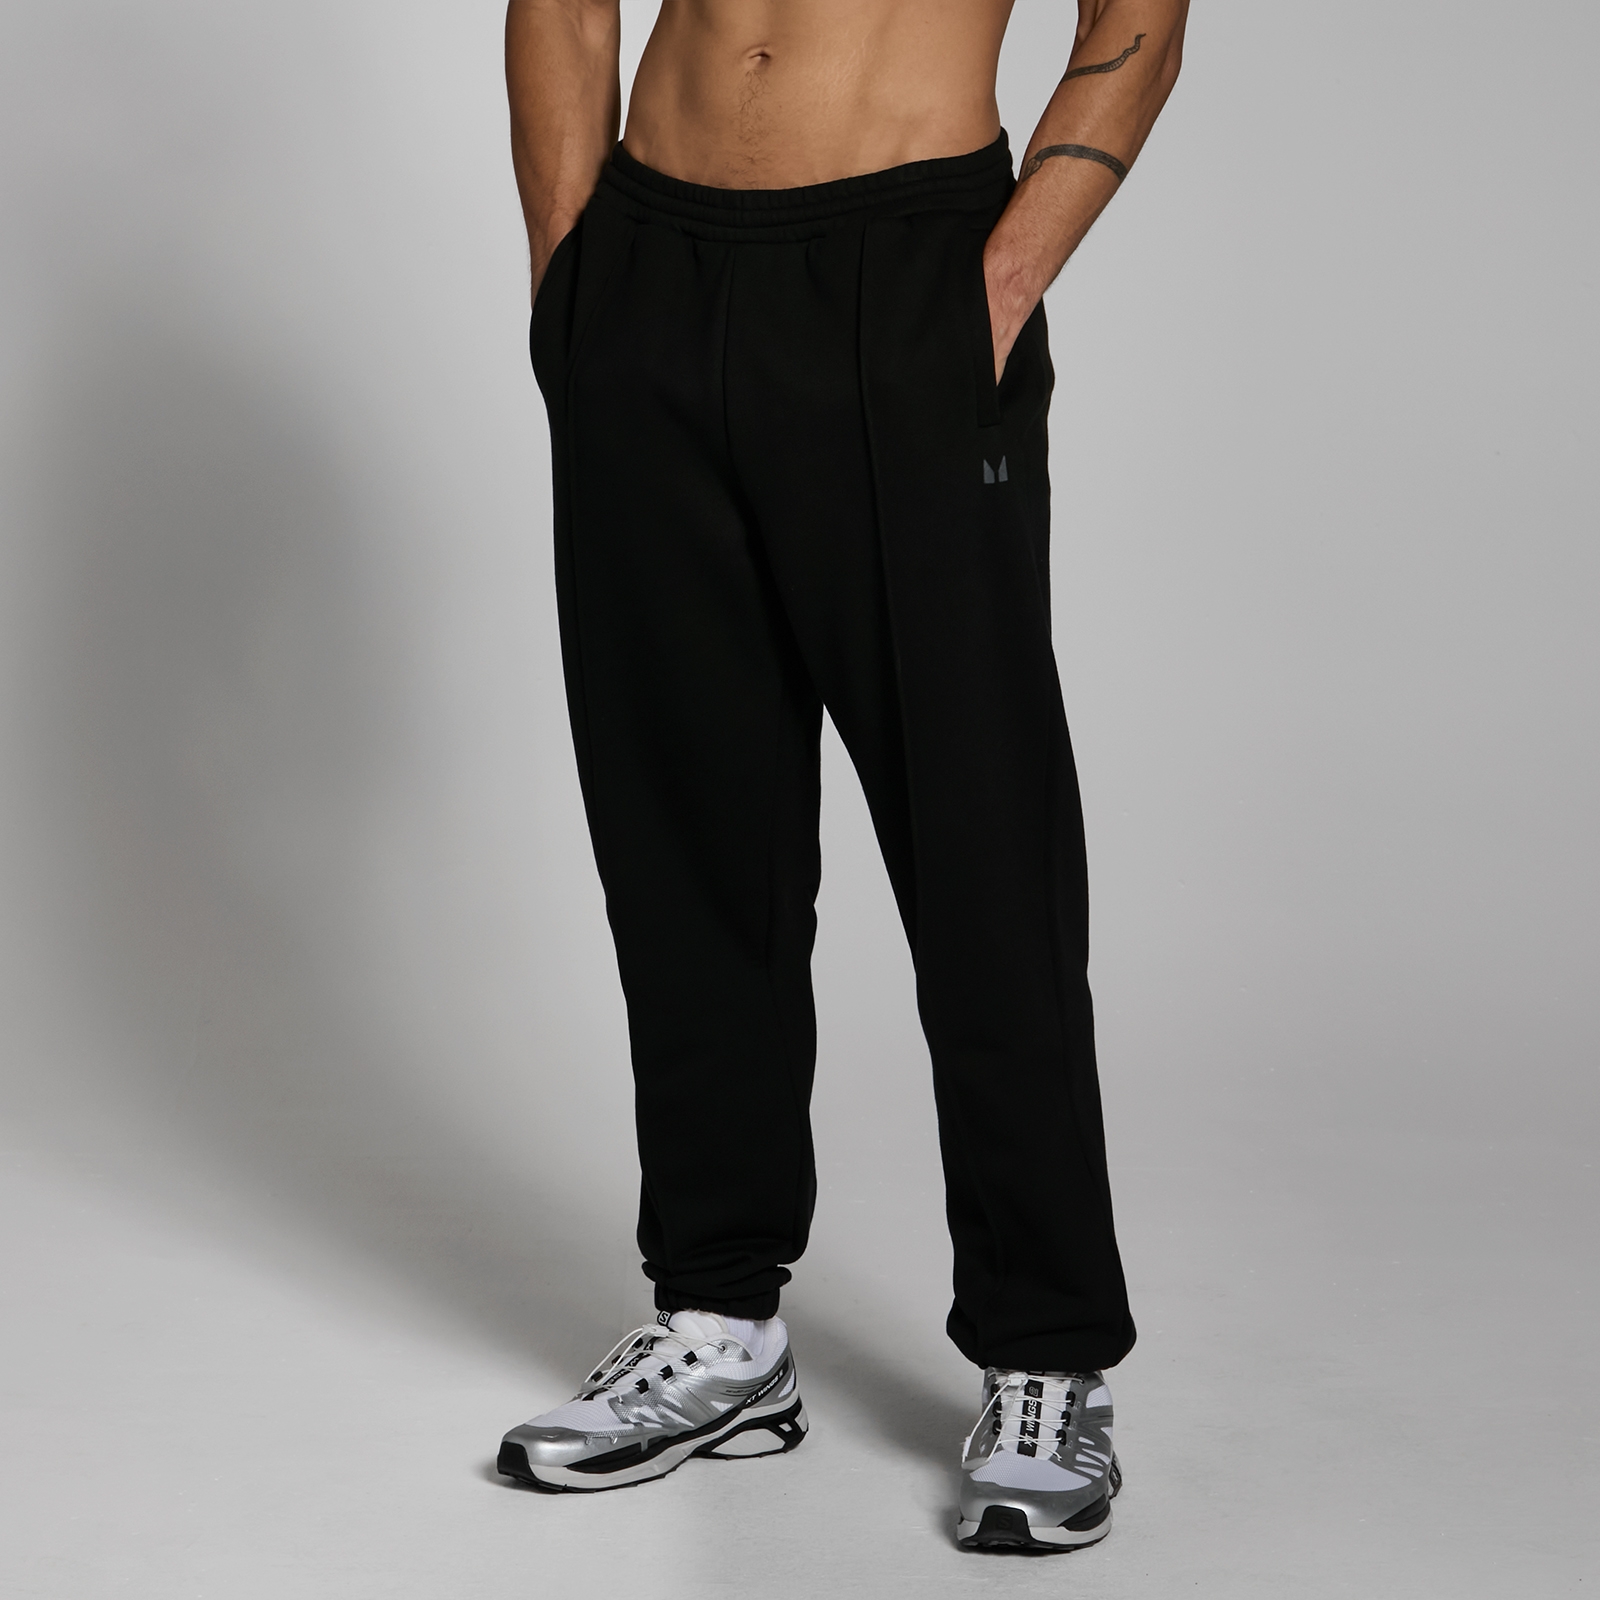 Image of Pantaloni da jogging oversize MP Lifestyle da uomo - Neri - XS